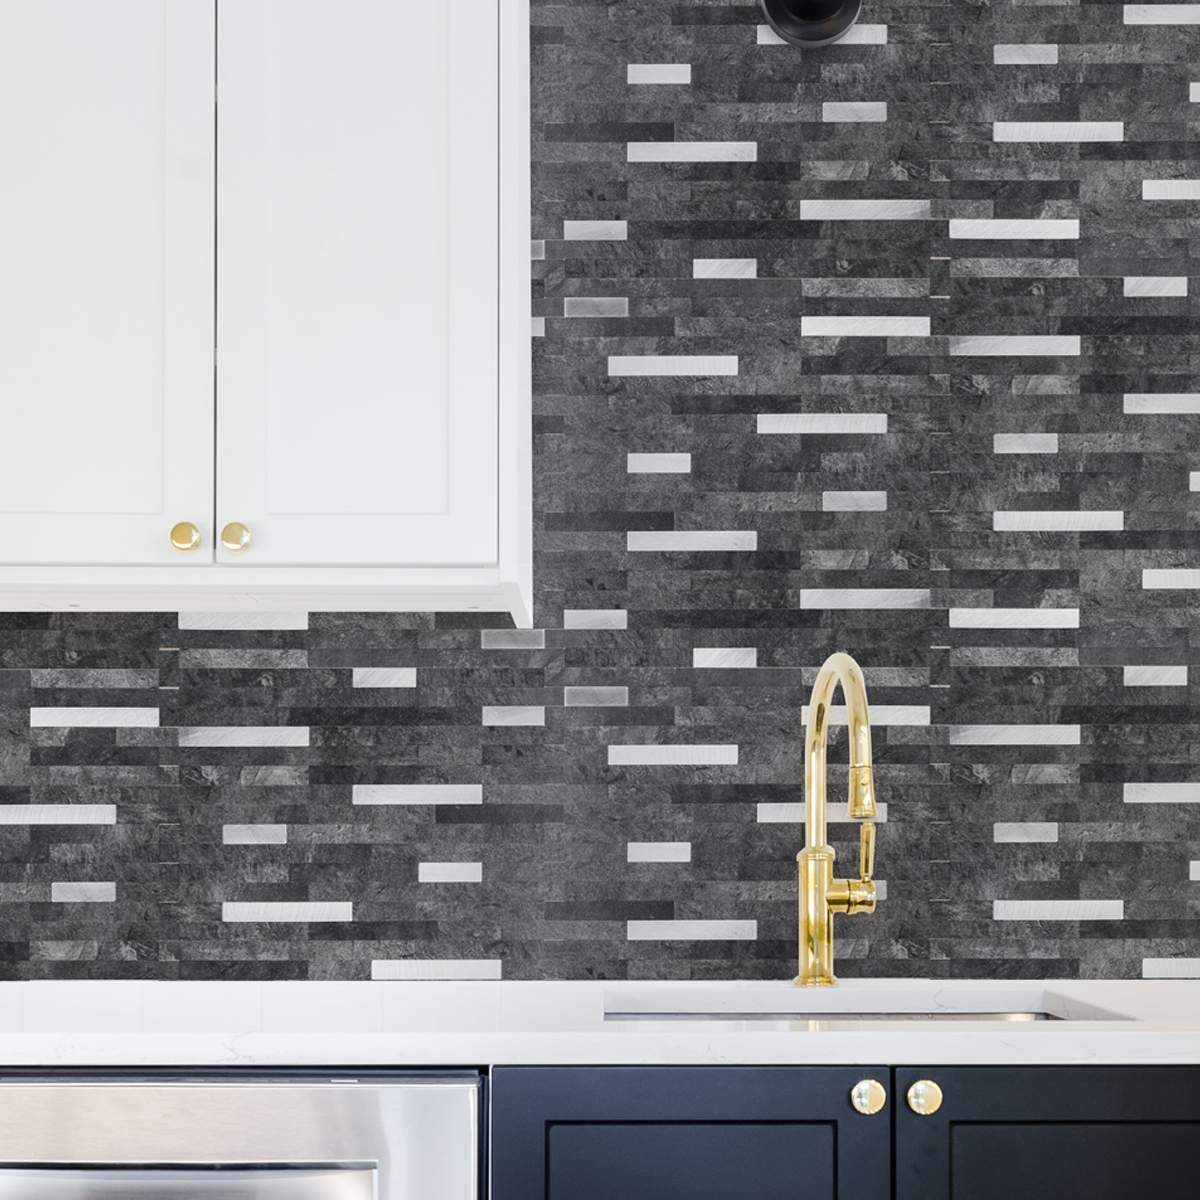 Art3d 10-Tiles Self Adhesive Wall Tile Peel and Stick Backsplash For  Kitchen, 12X12